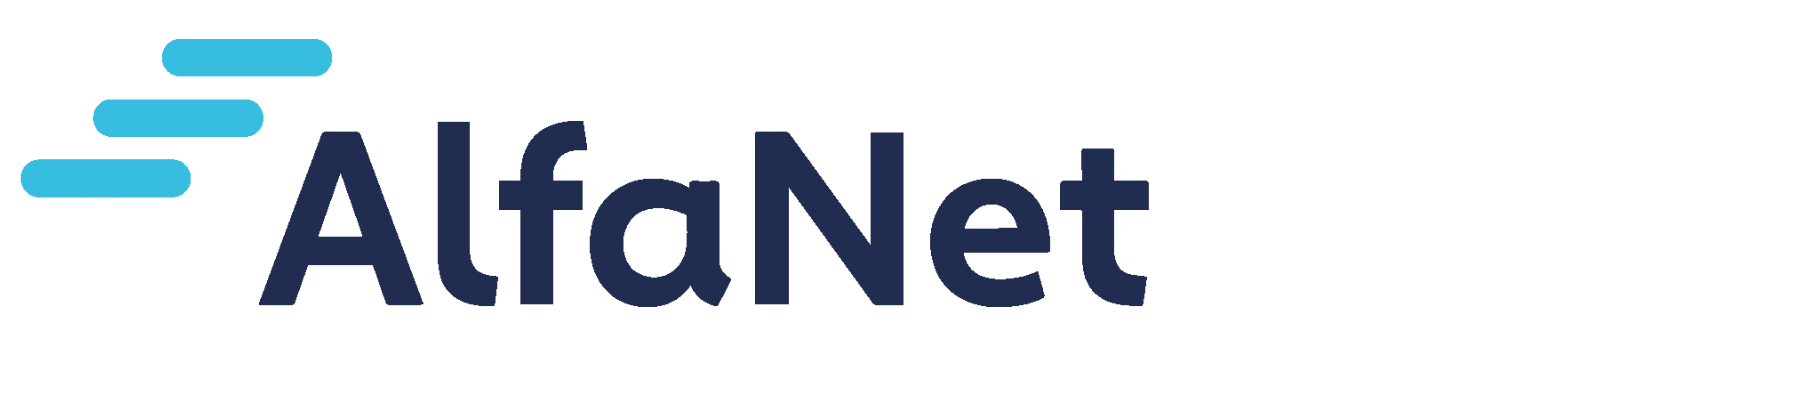 AlfaNet logo